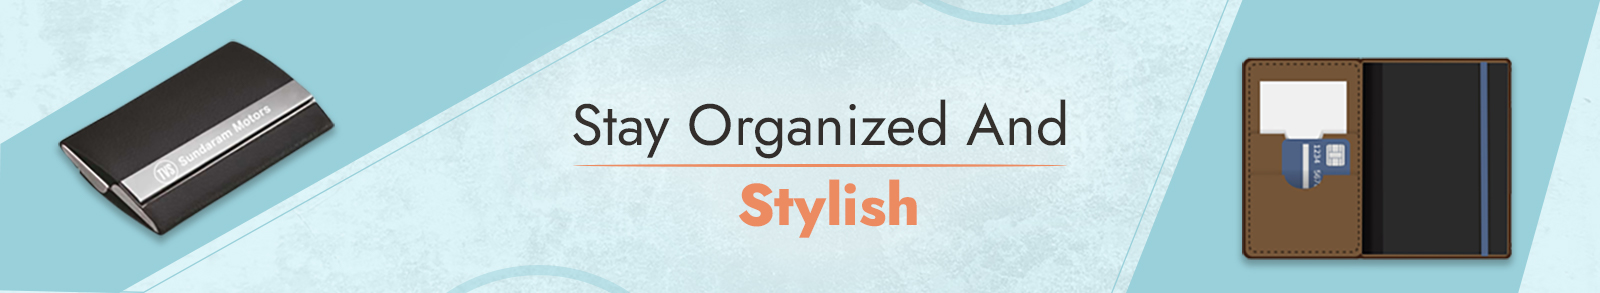 Stay Organized And Stylish